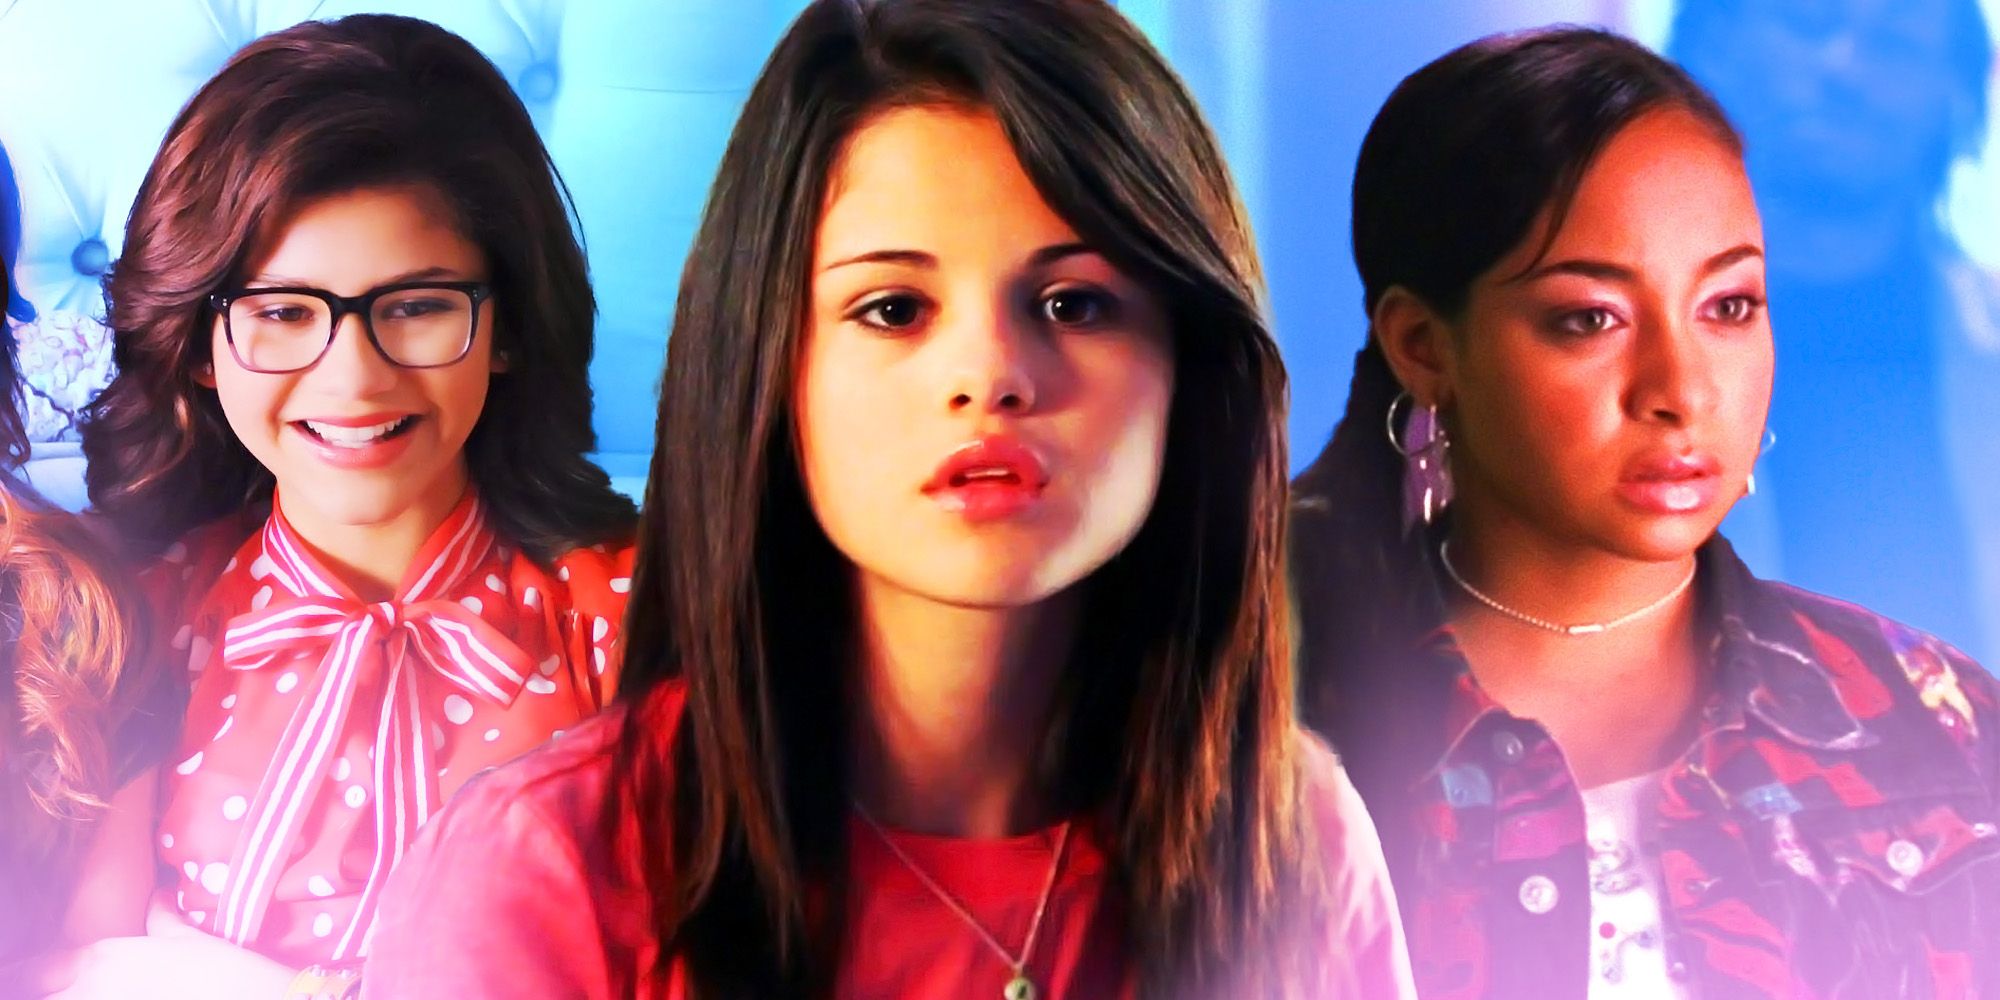 A custom image featuring Raven-Symoné in Cheetah Girls, Zendaya in Frenemies, and Selena Gomez in Princess Protection Program